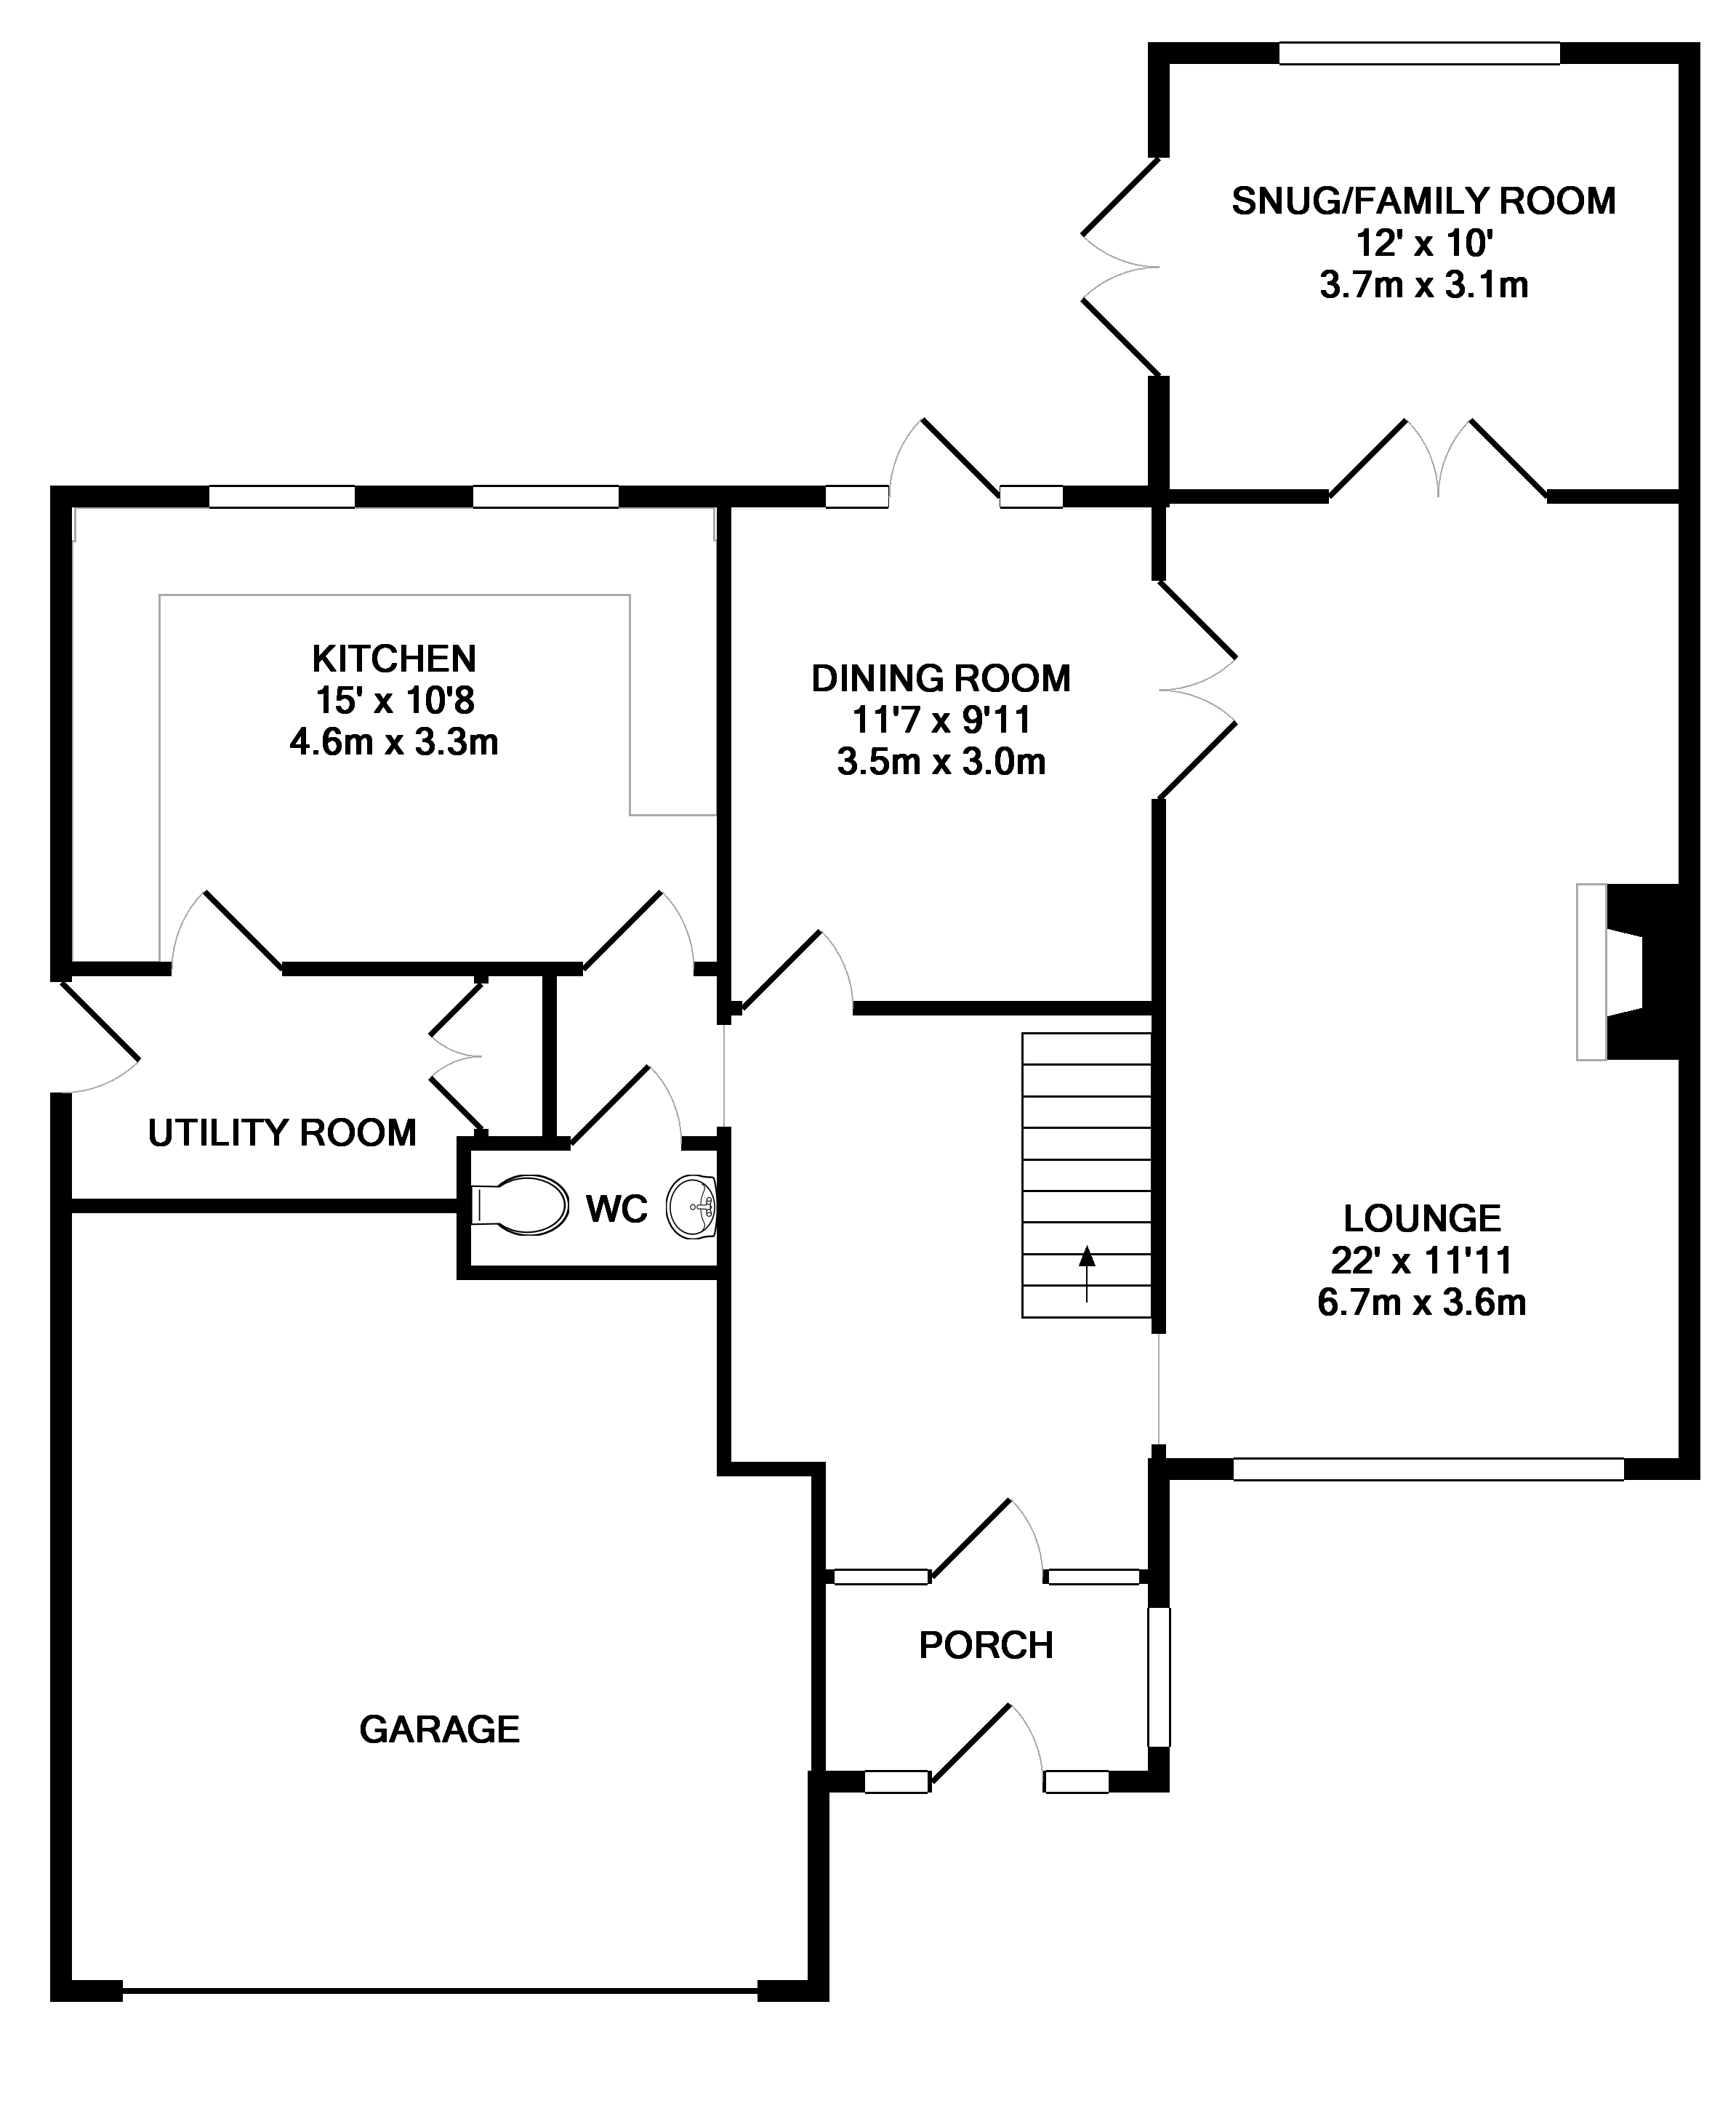 Supersize estate house - host house ground floor plan